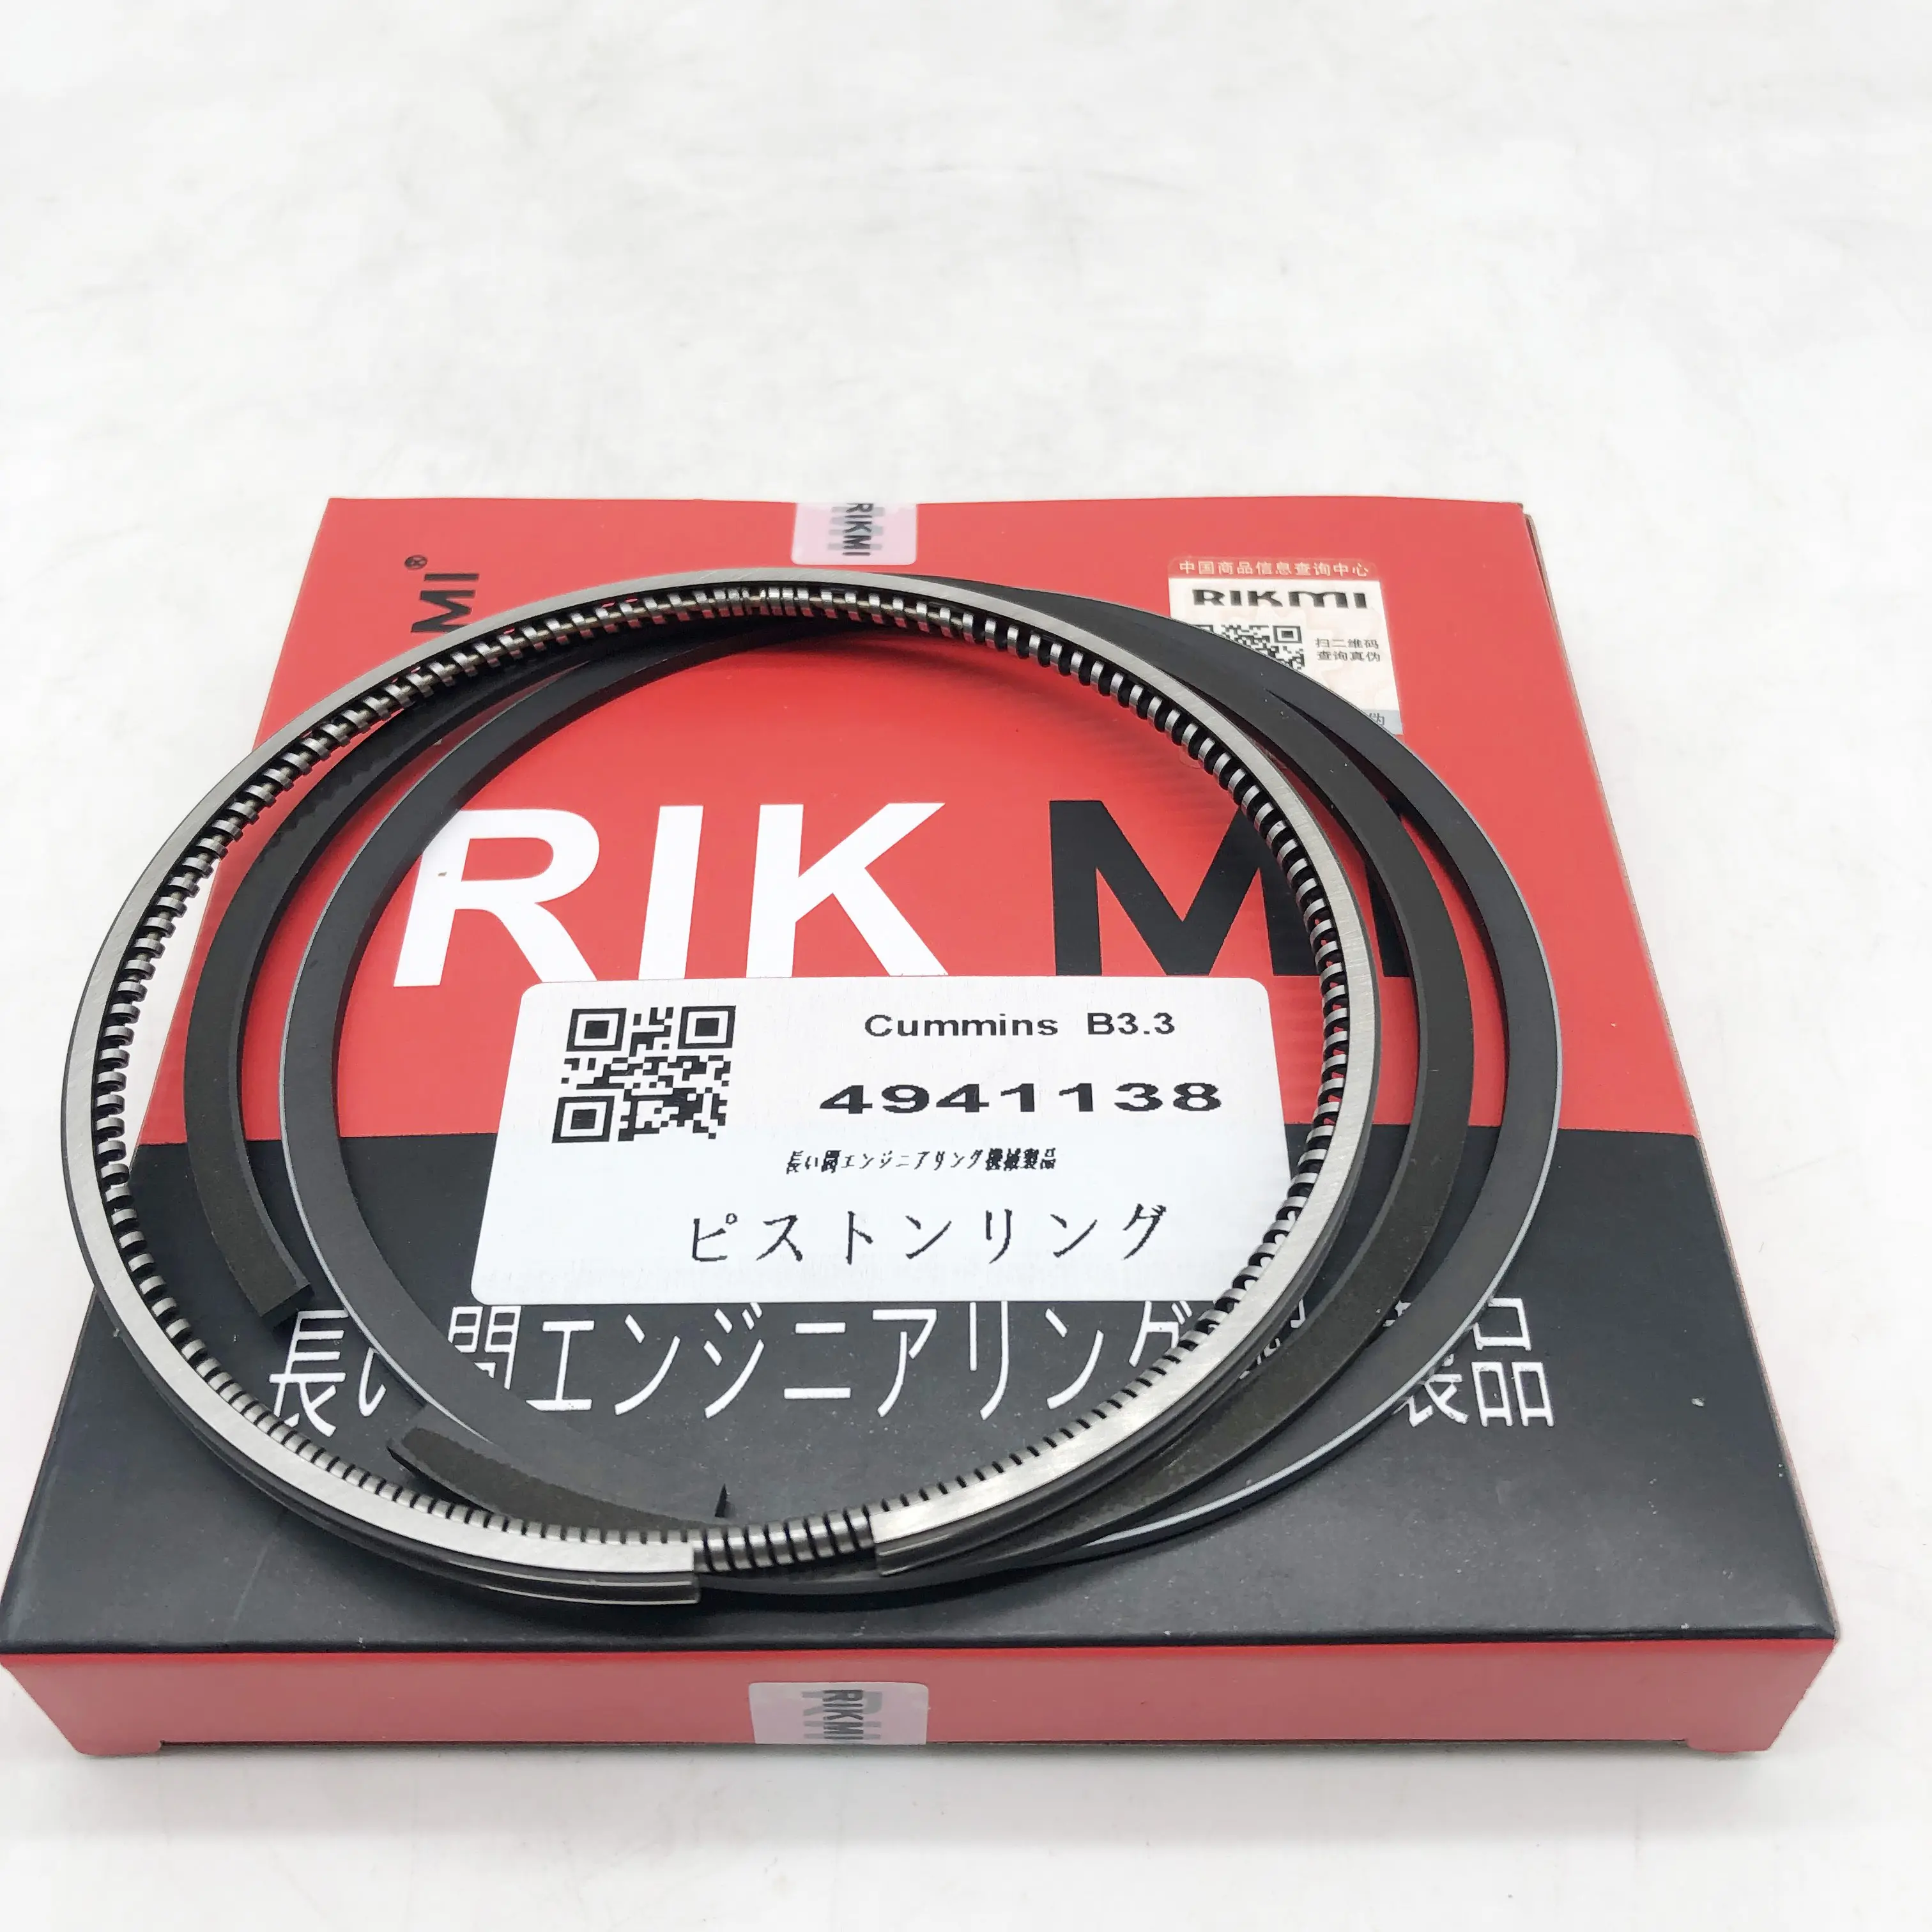 Rikmi high quality piston ring for Cummins B3.3 diesel engine 4941138 6208-31-2400